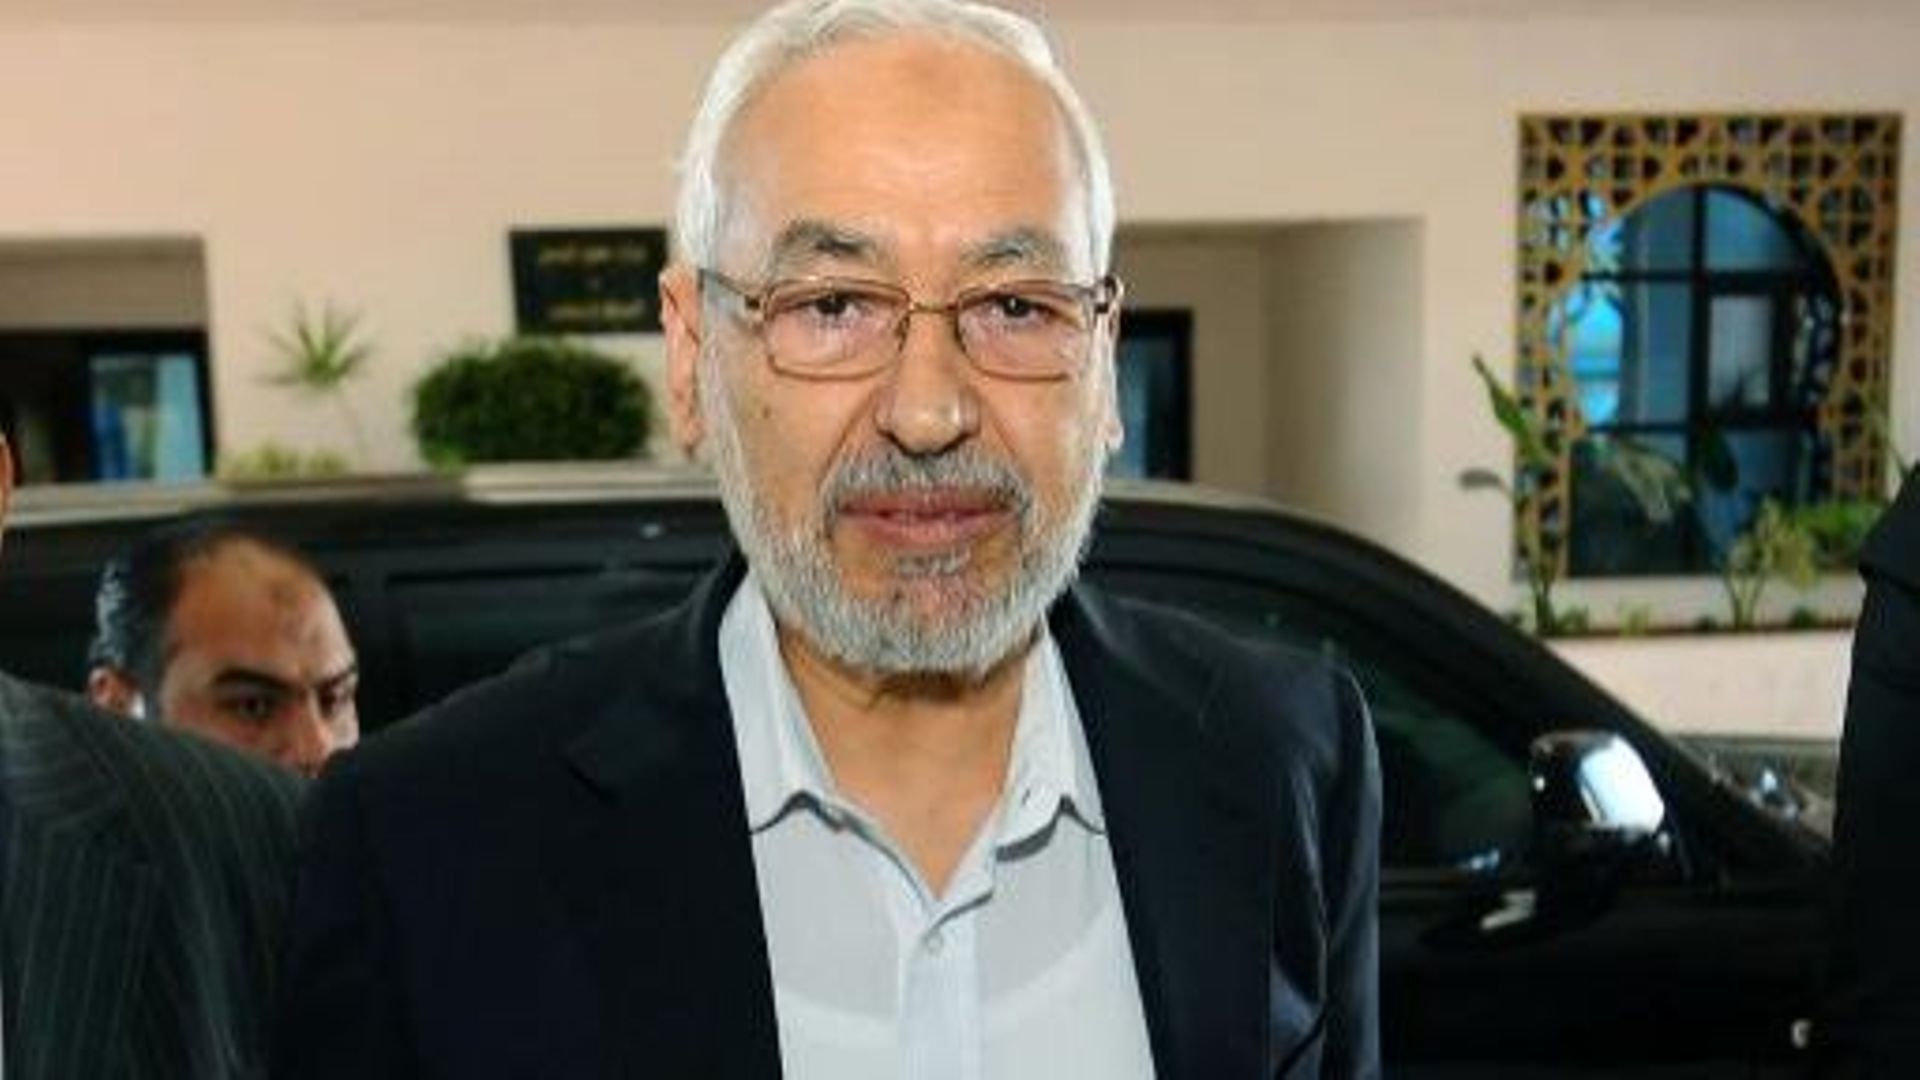 Le leader du parti islamiste Ennahda, Rached Ghannouchi, le 2 novembre 2013 à Tunis